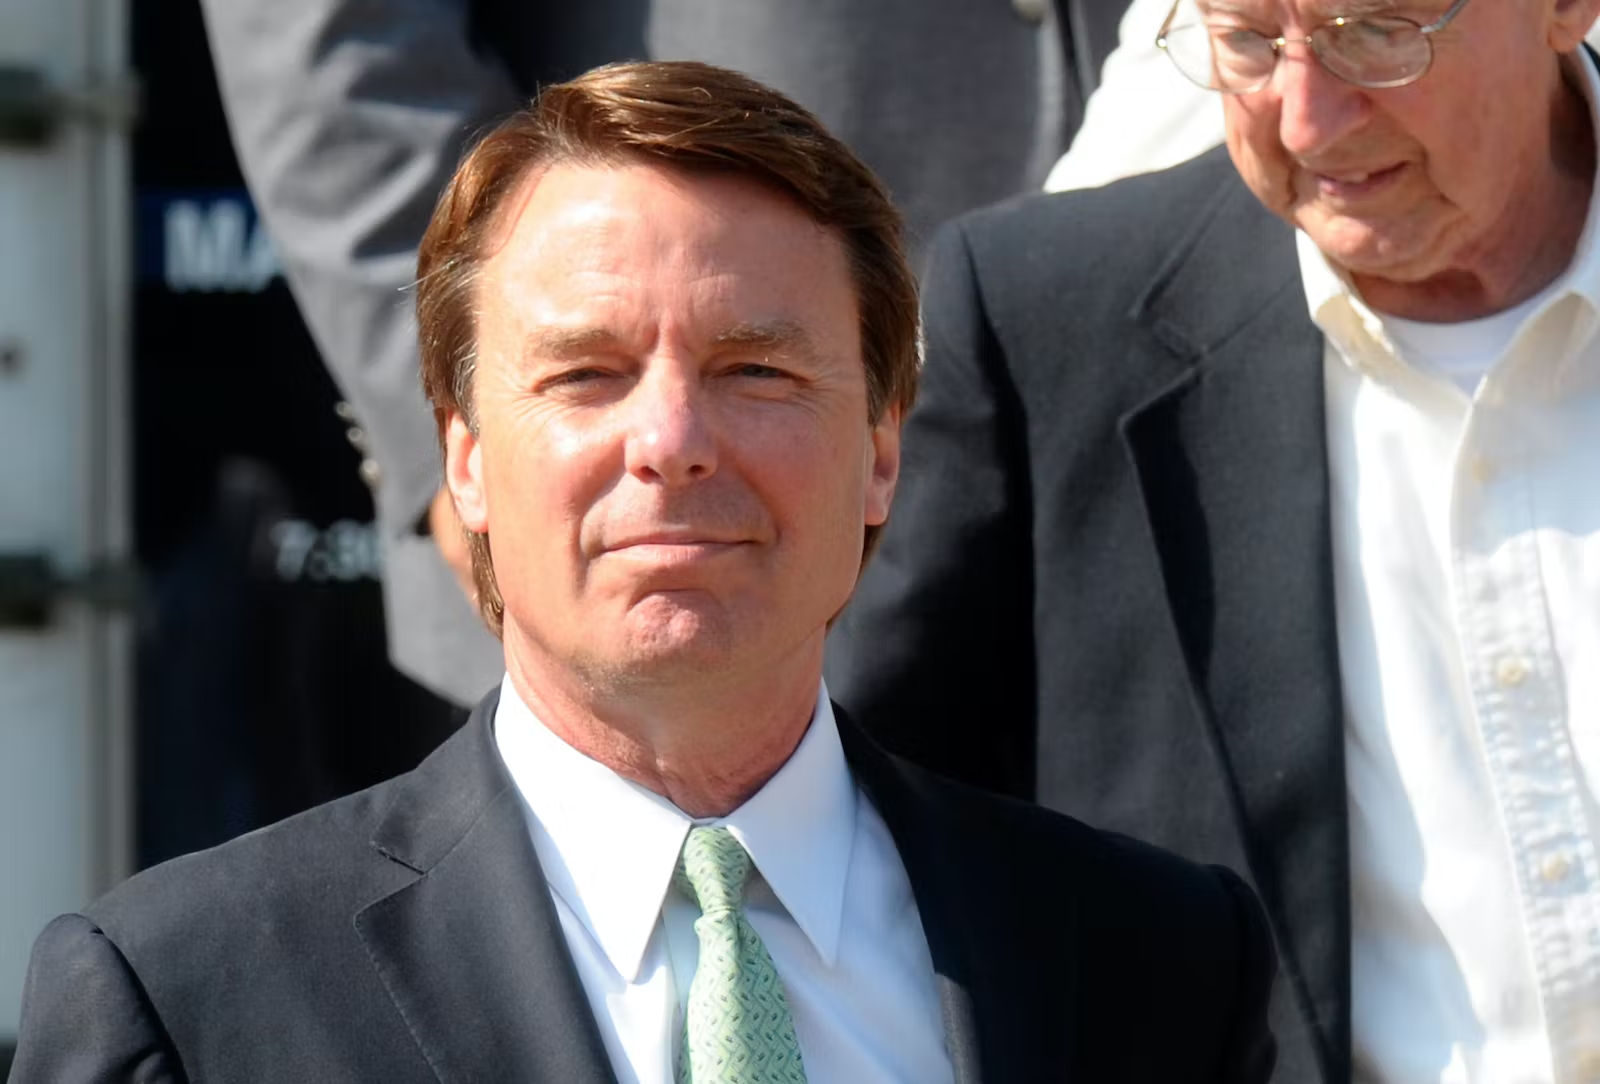 John Edwards, former US Democrat and Senator from North Carolina